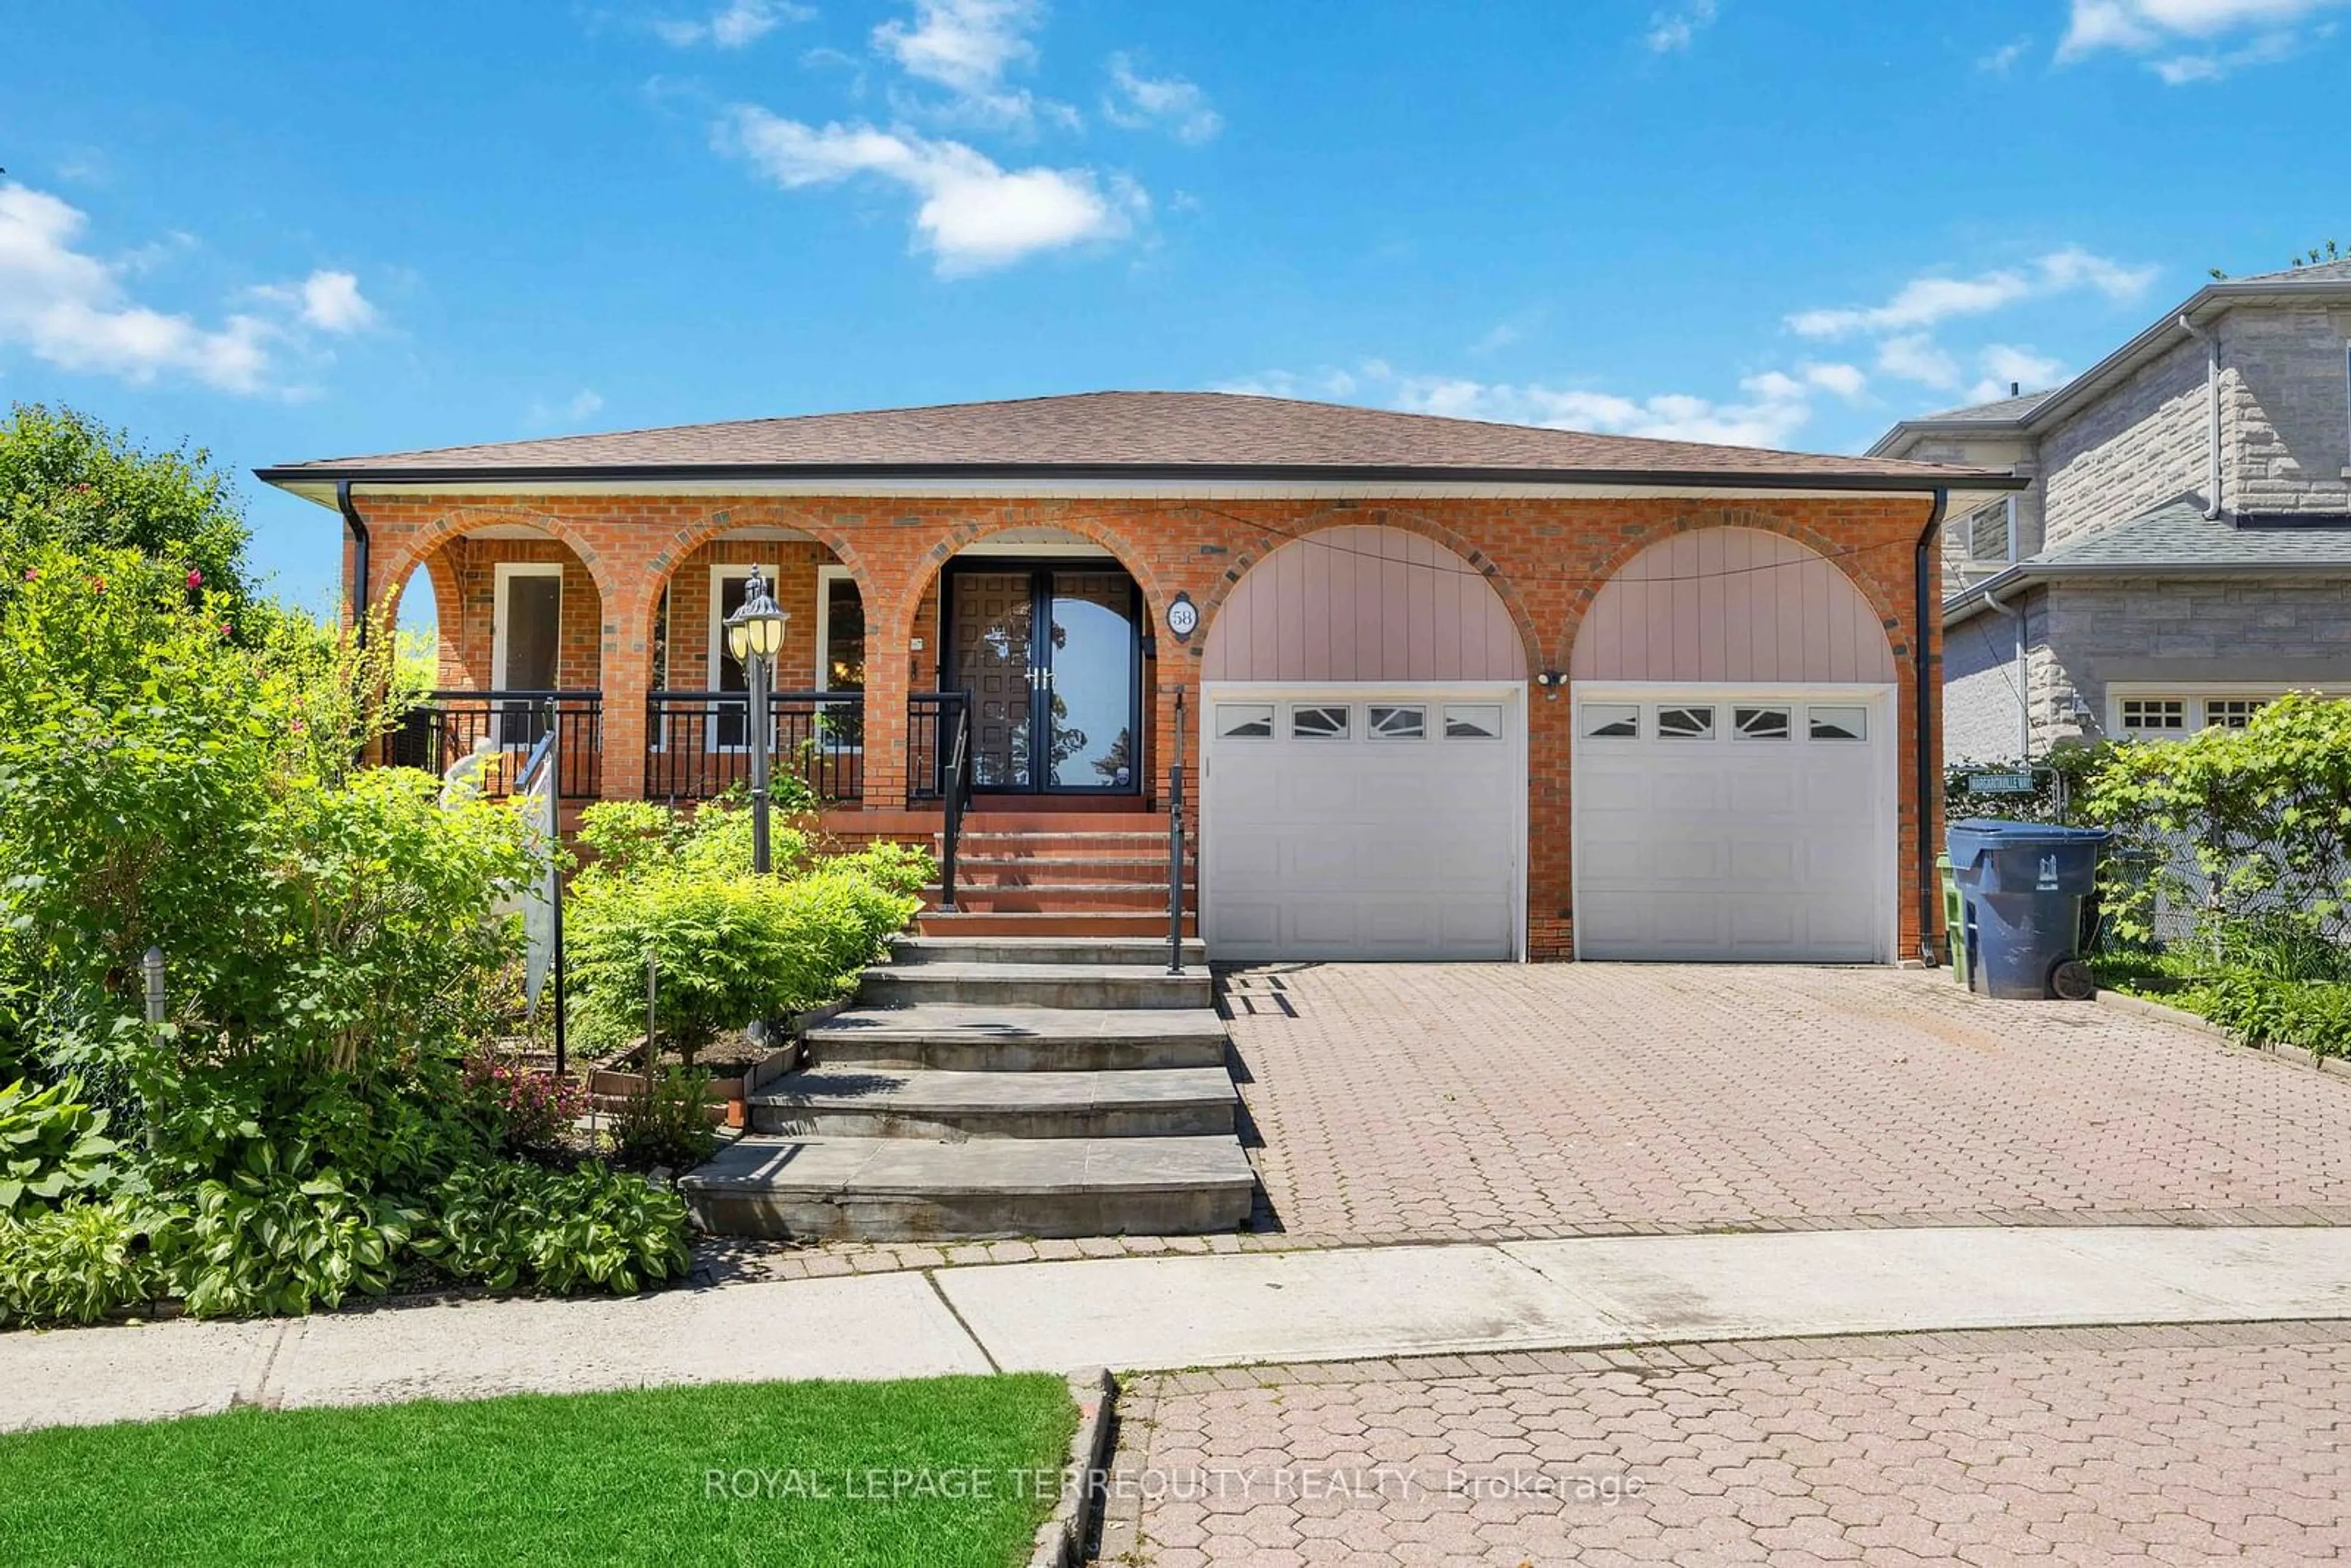 Home with brick exterior material for 58 Tidworth Sq, Toronto Ontario M1S 2V3